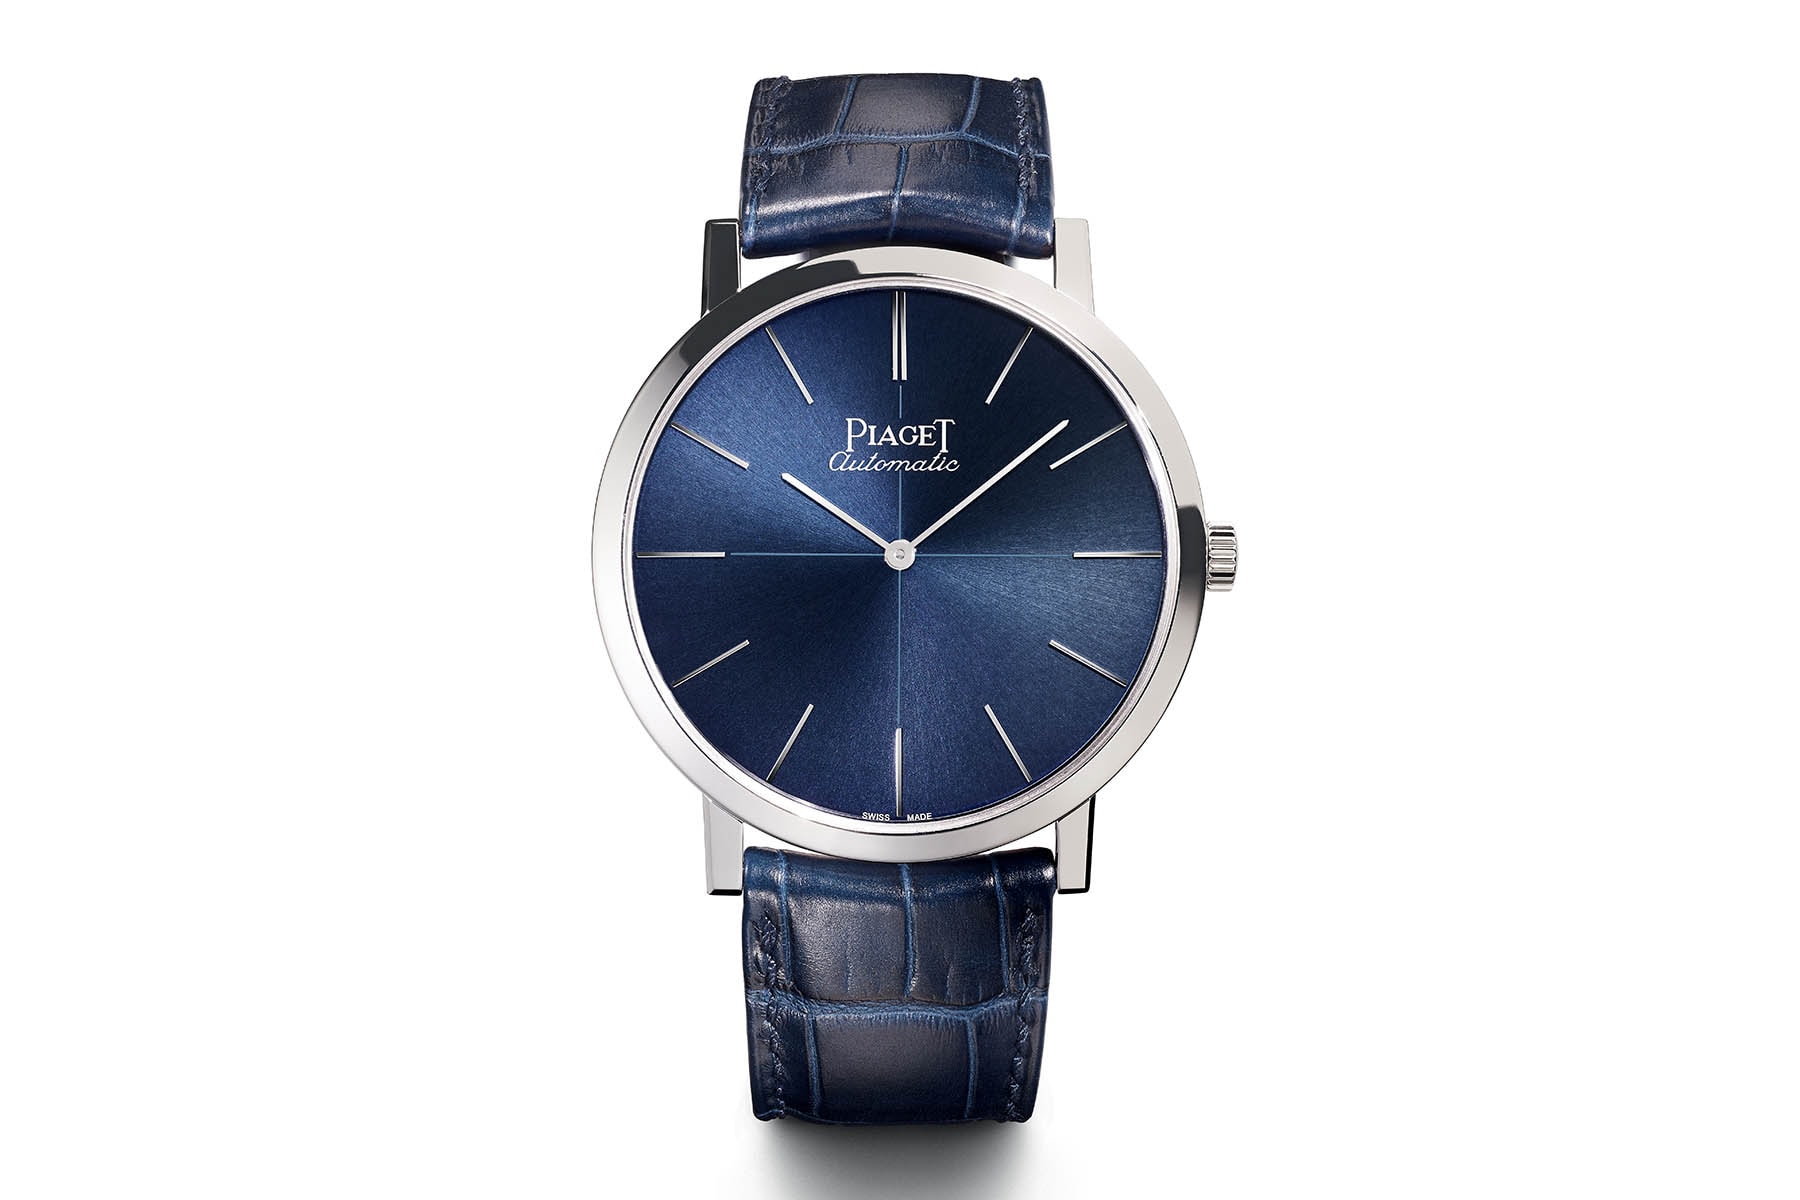 PIAGET 全球最薄腕錶 Altiplano 60 周年活動回顧